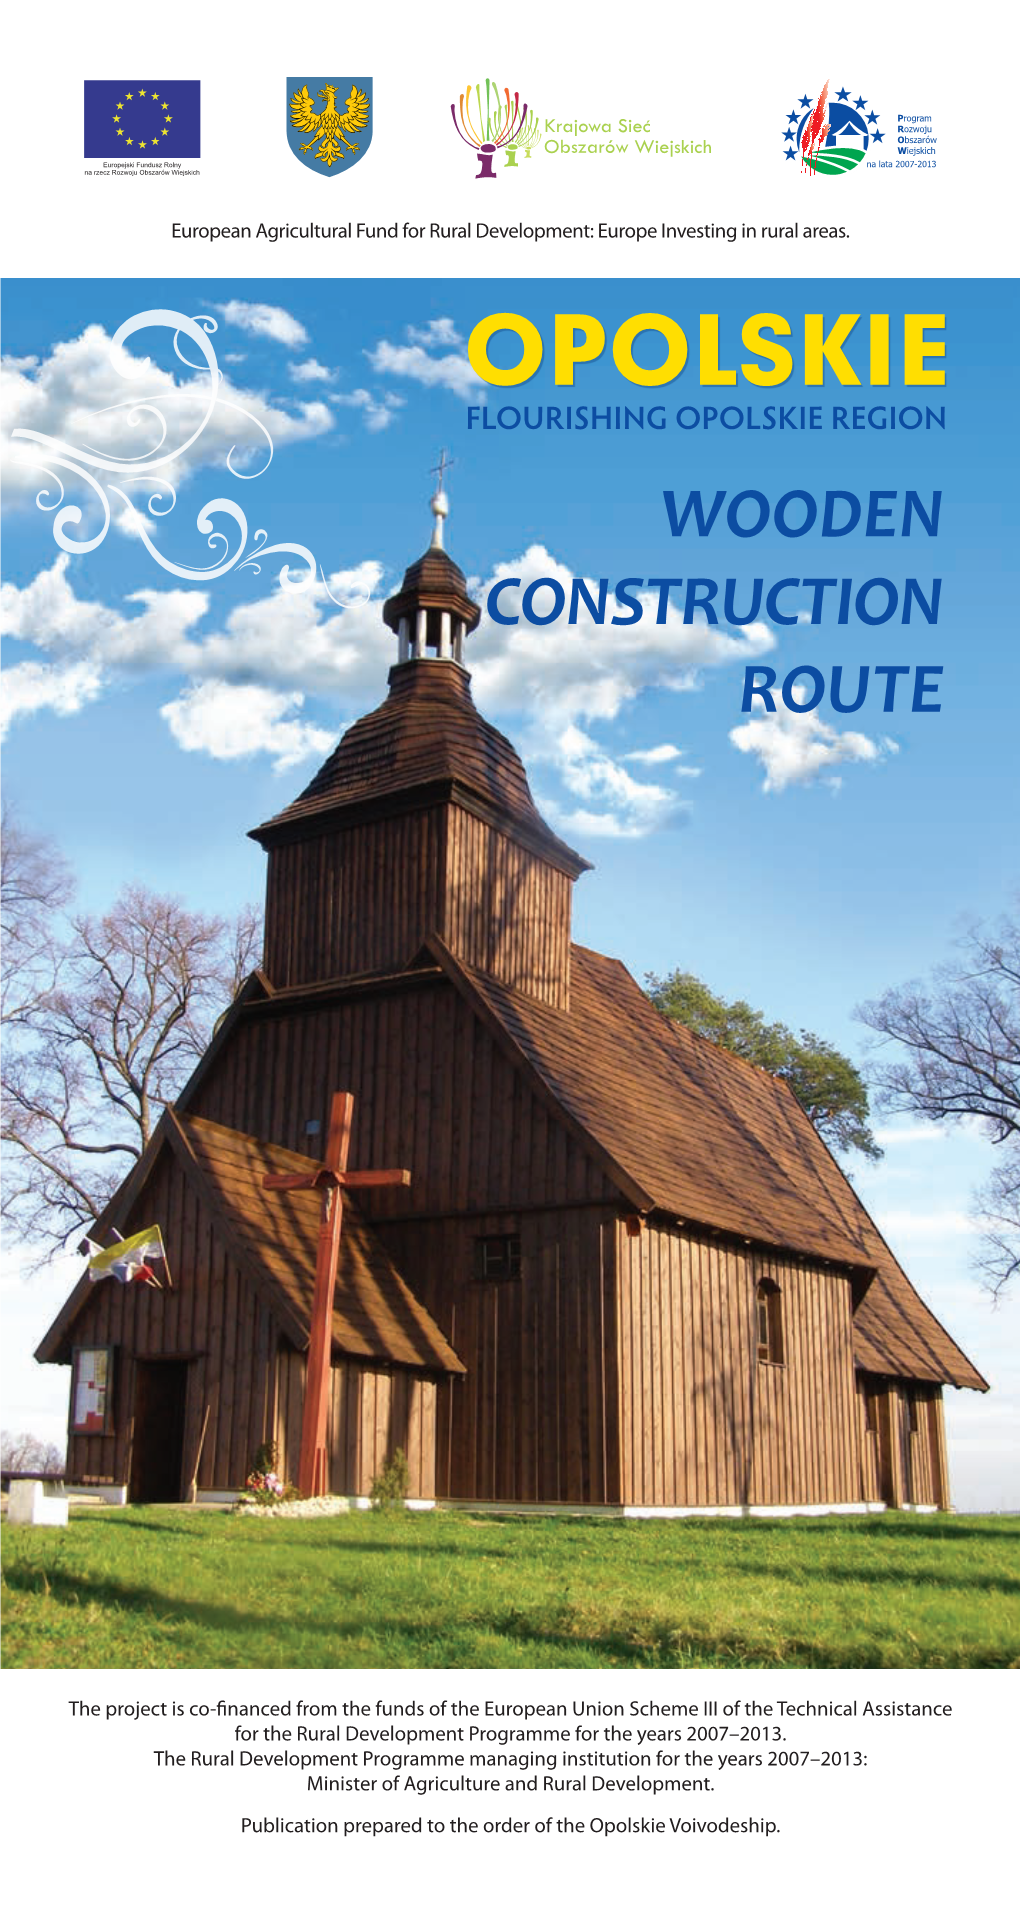 Wooden Construction Route